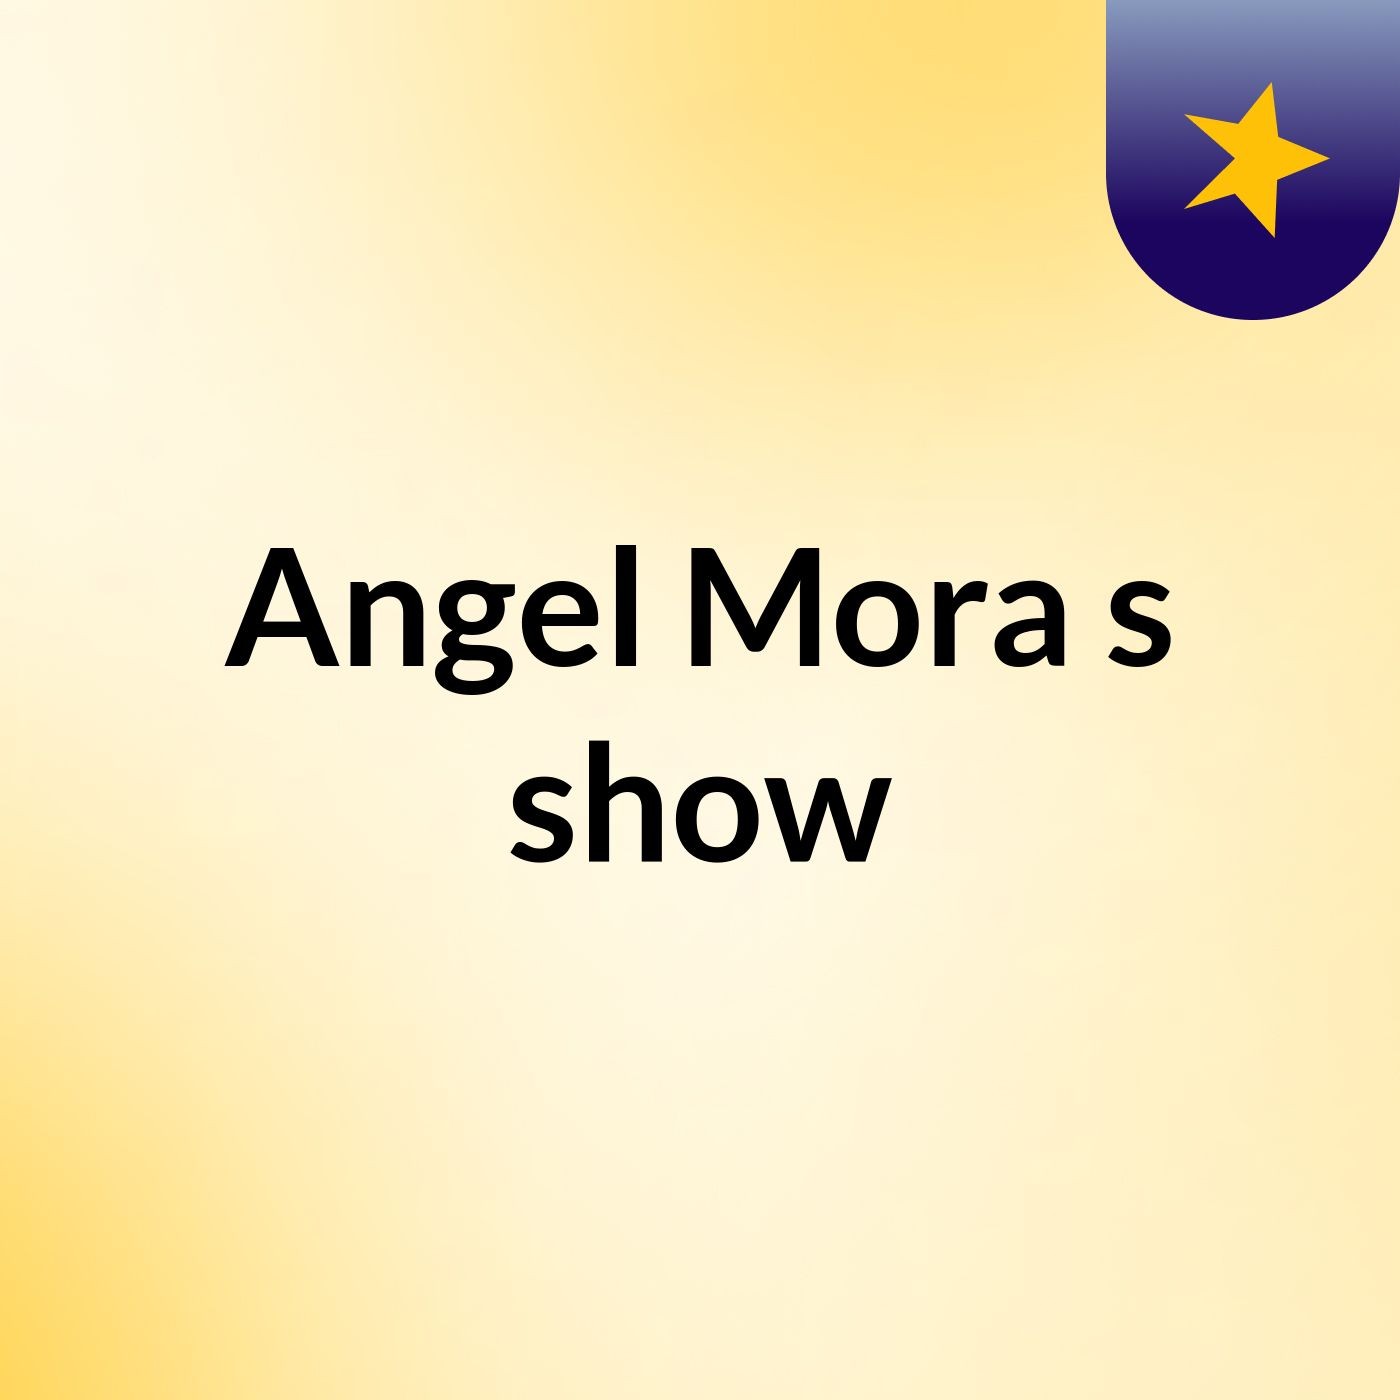 Angel Mora's show